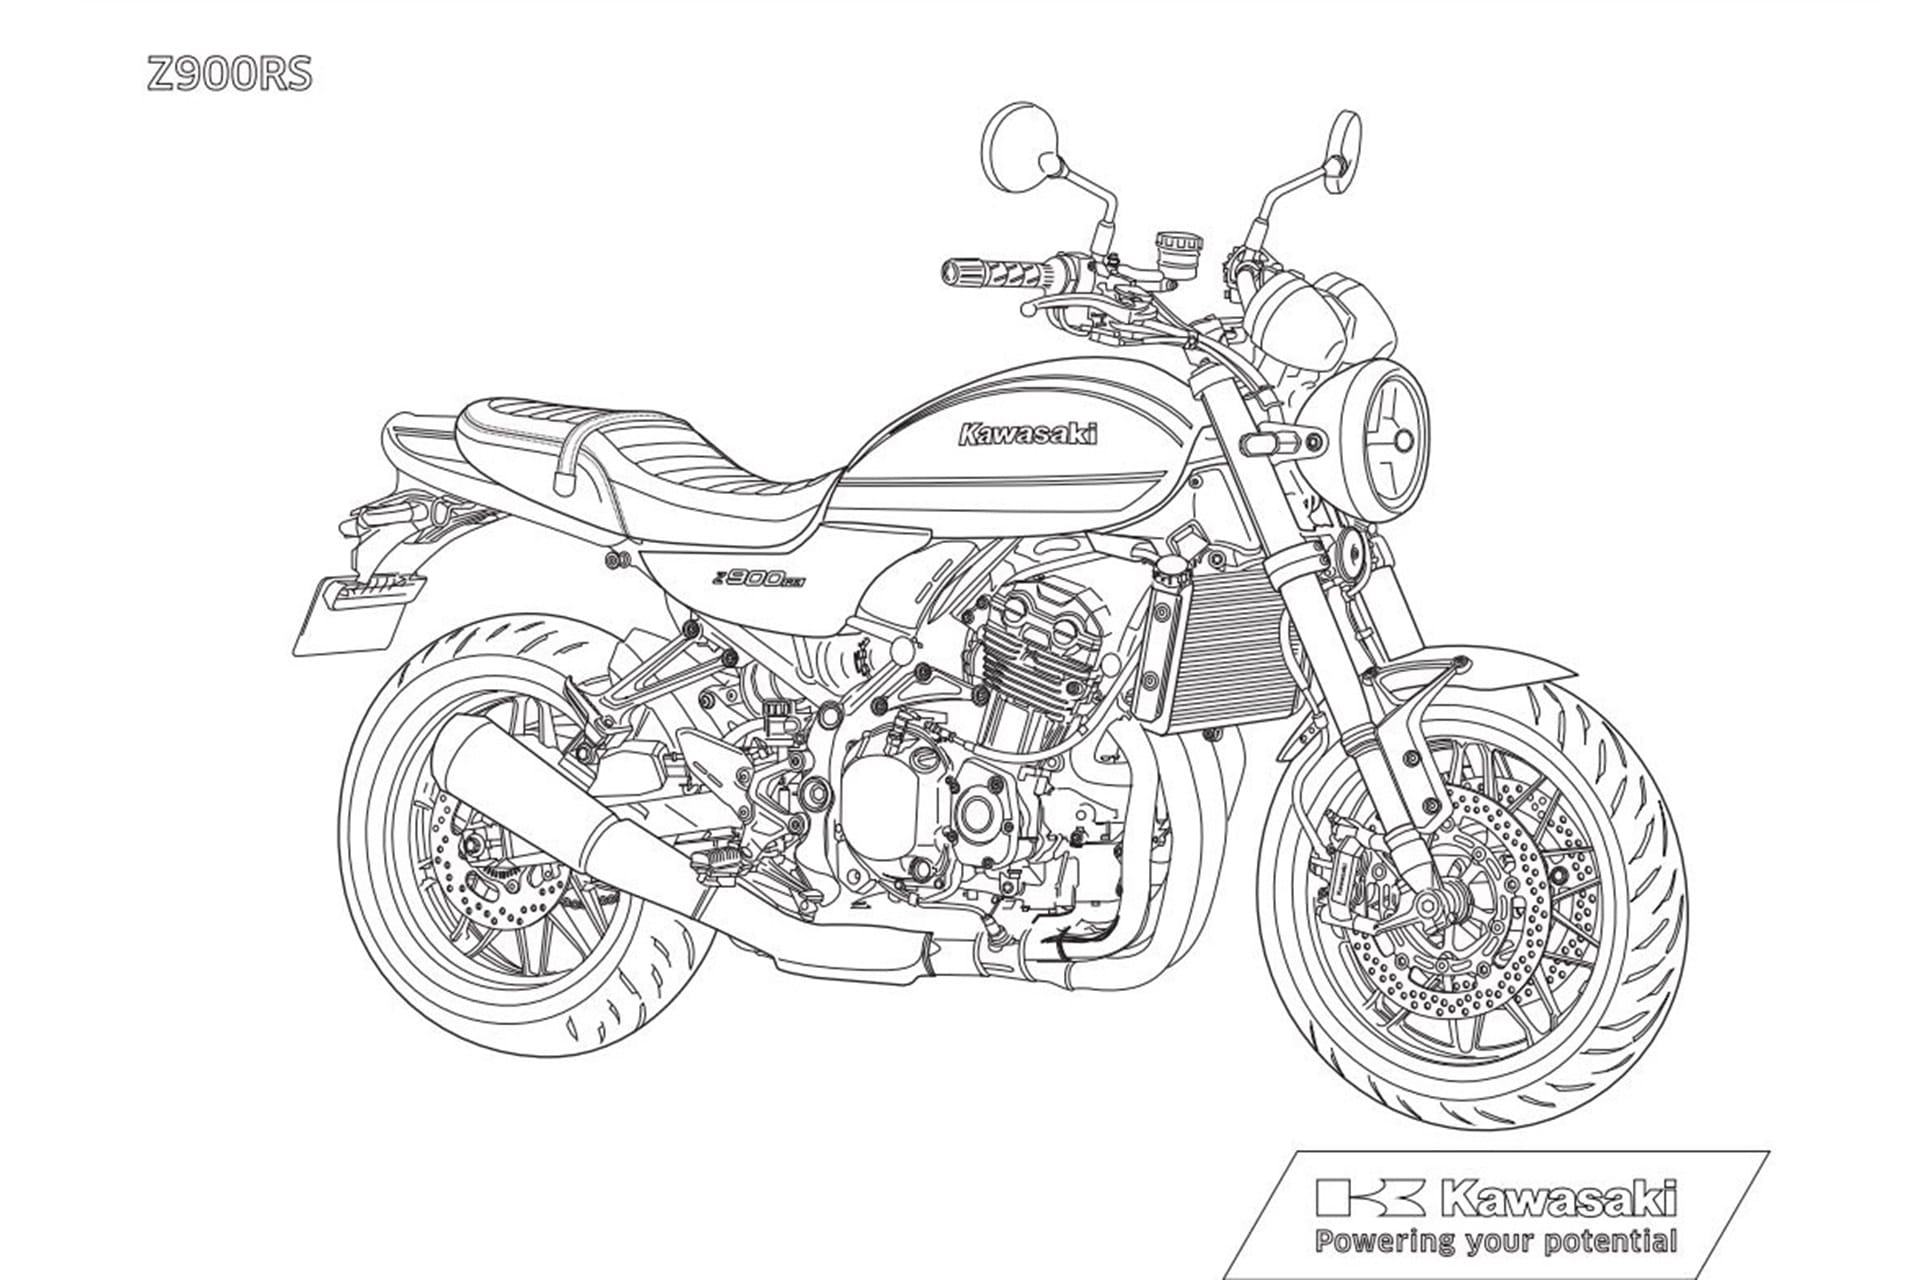 Las motos de Kawasaki ahora en "modo coloreable"